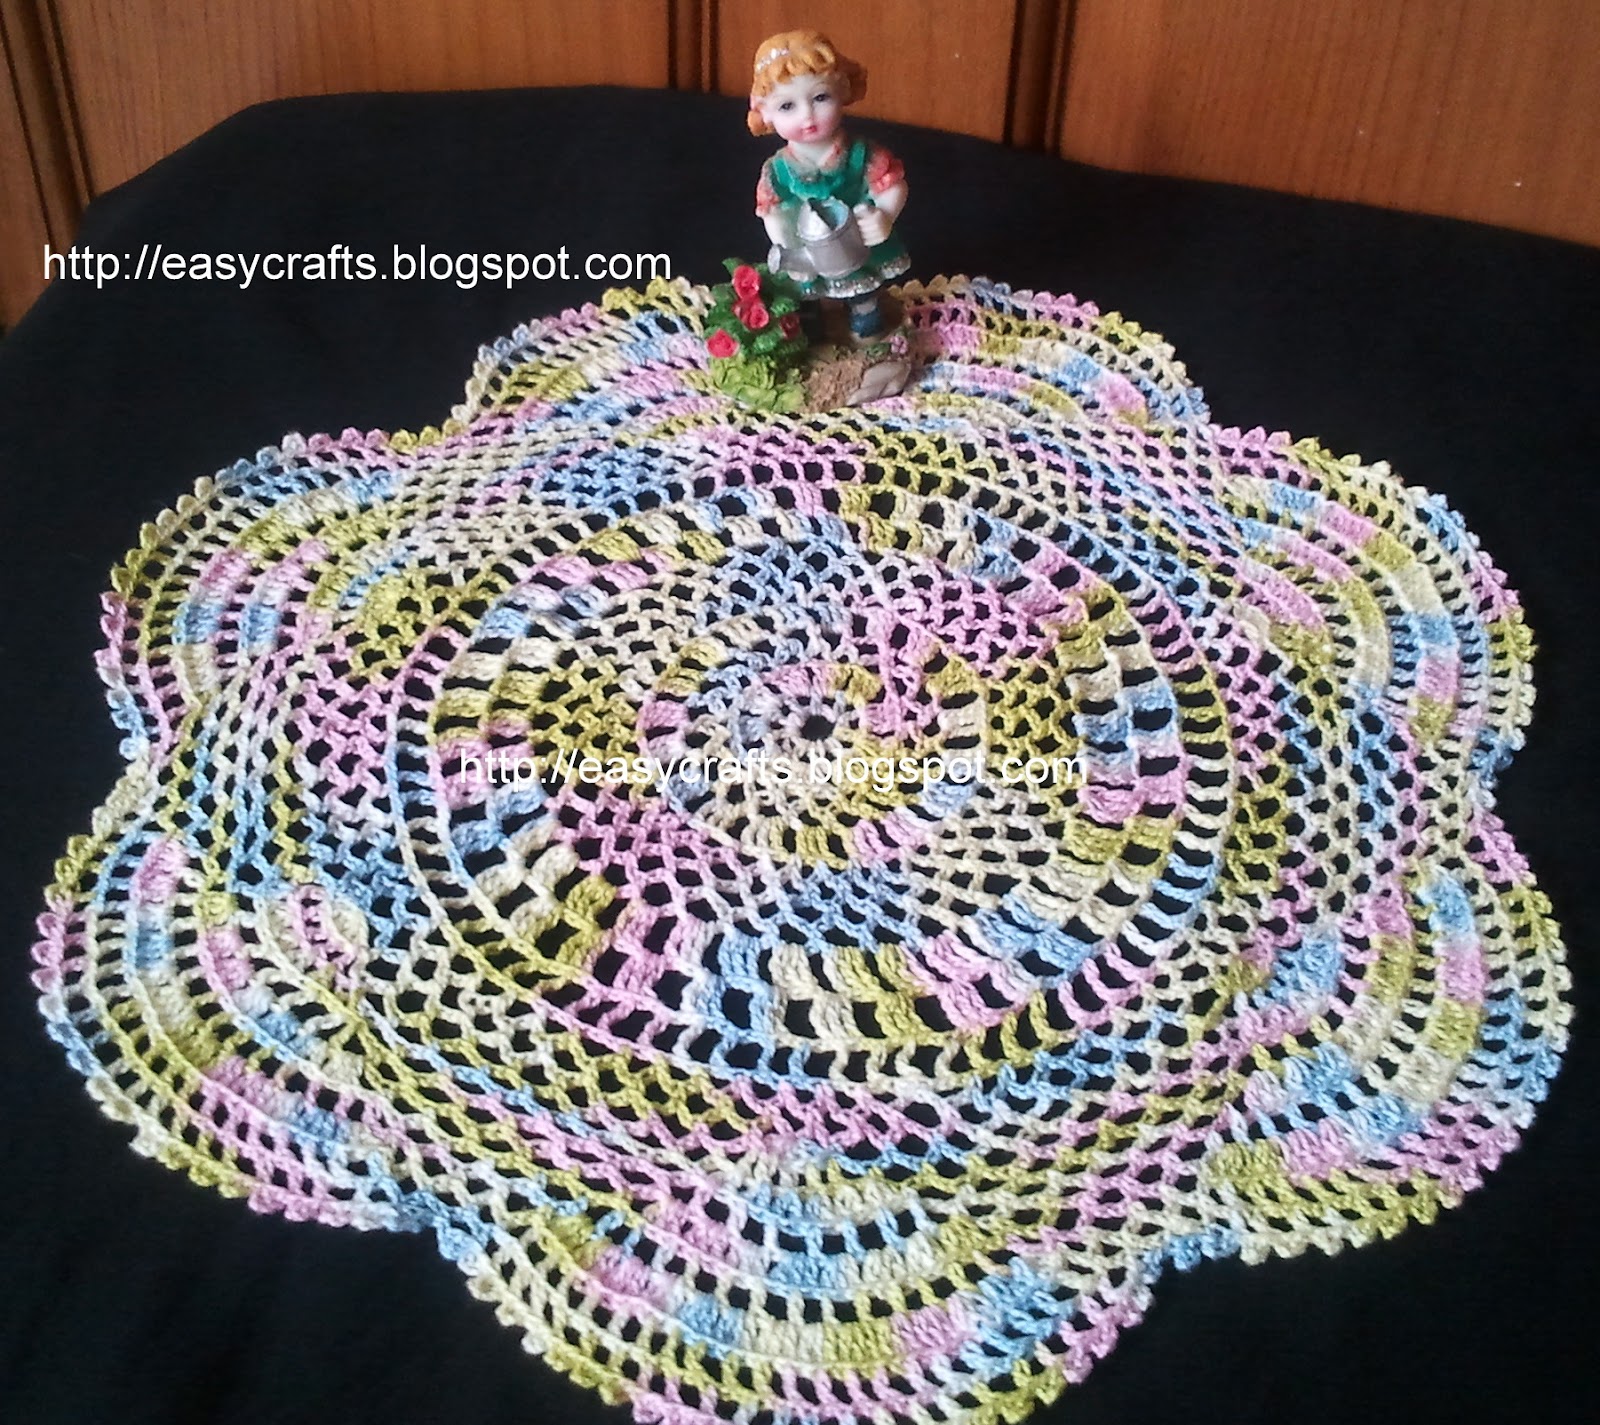 easy-crafts-explore-your-creativity-multi-colour-crochet-doily